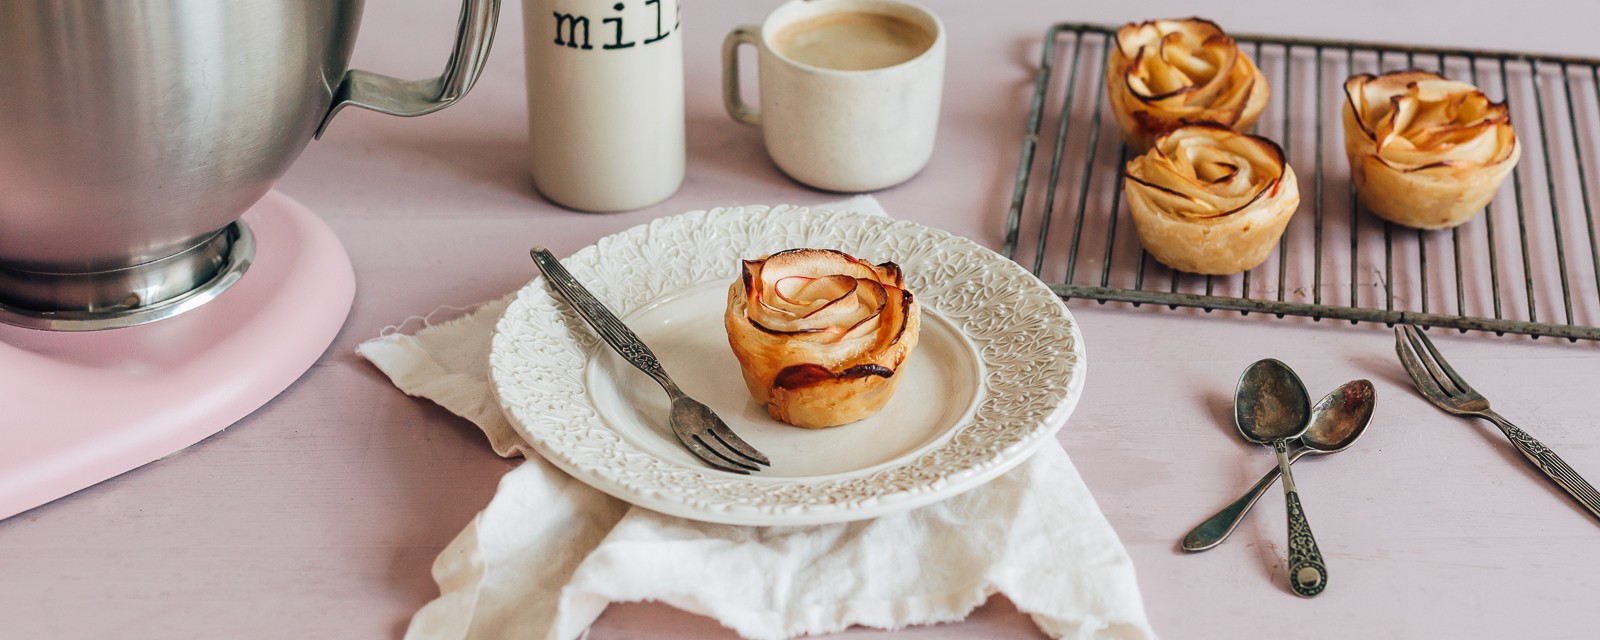 Import-Recipe - Apple roses tarts